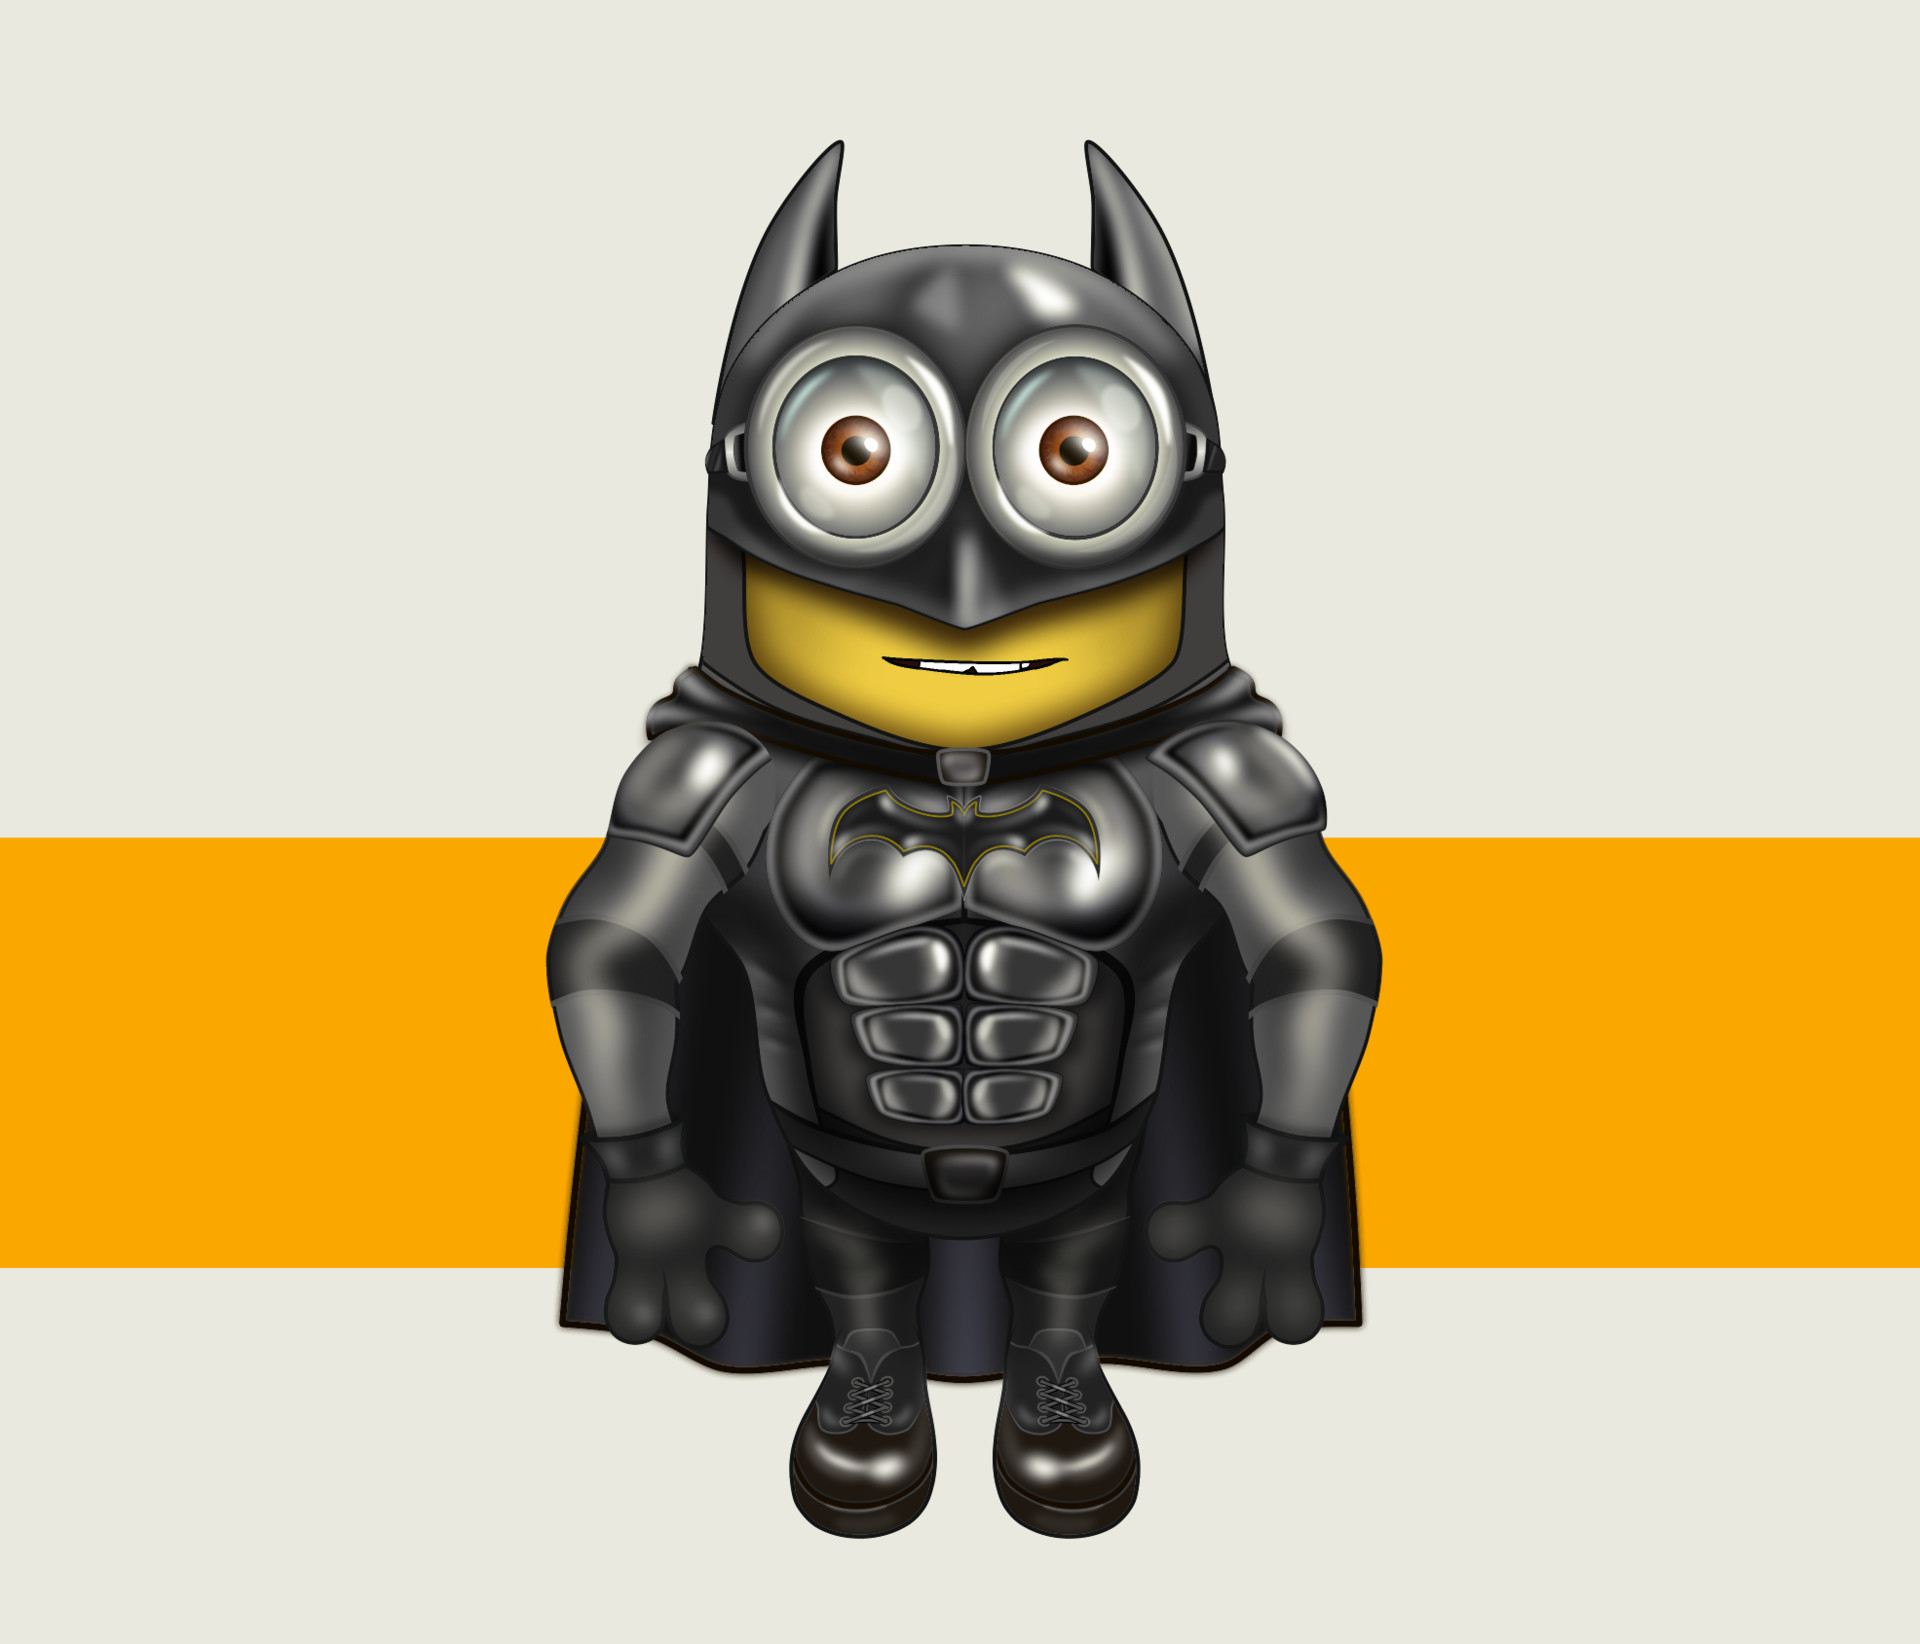 ArtStation - minions batman